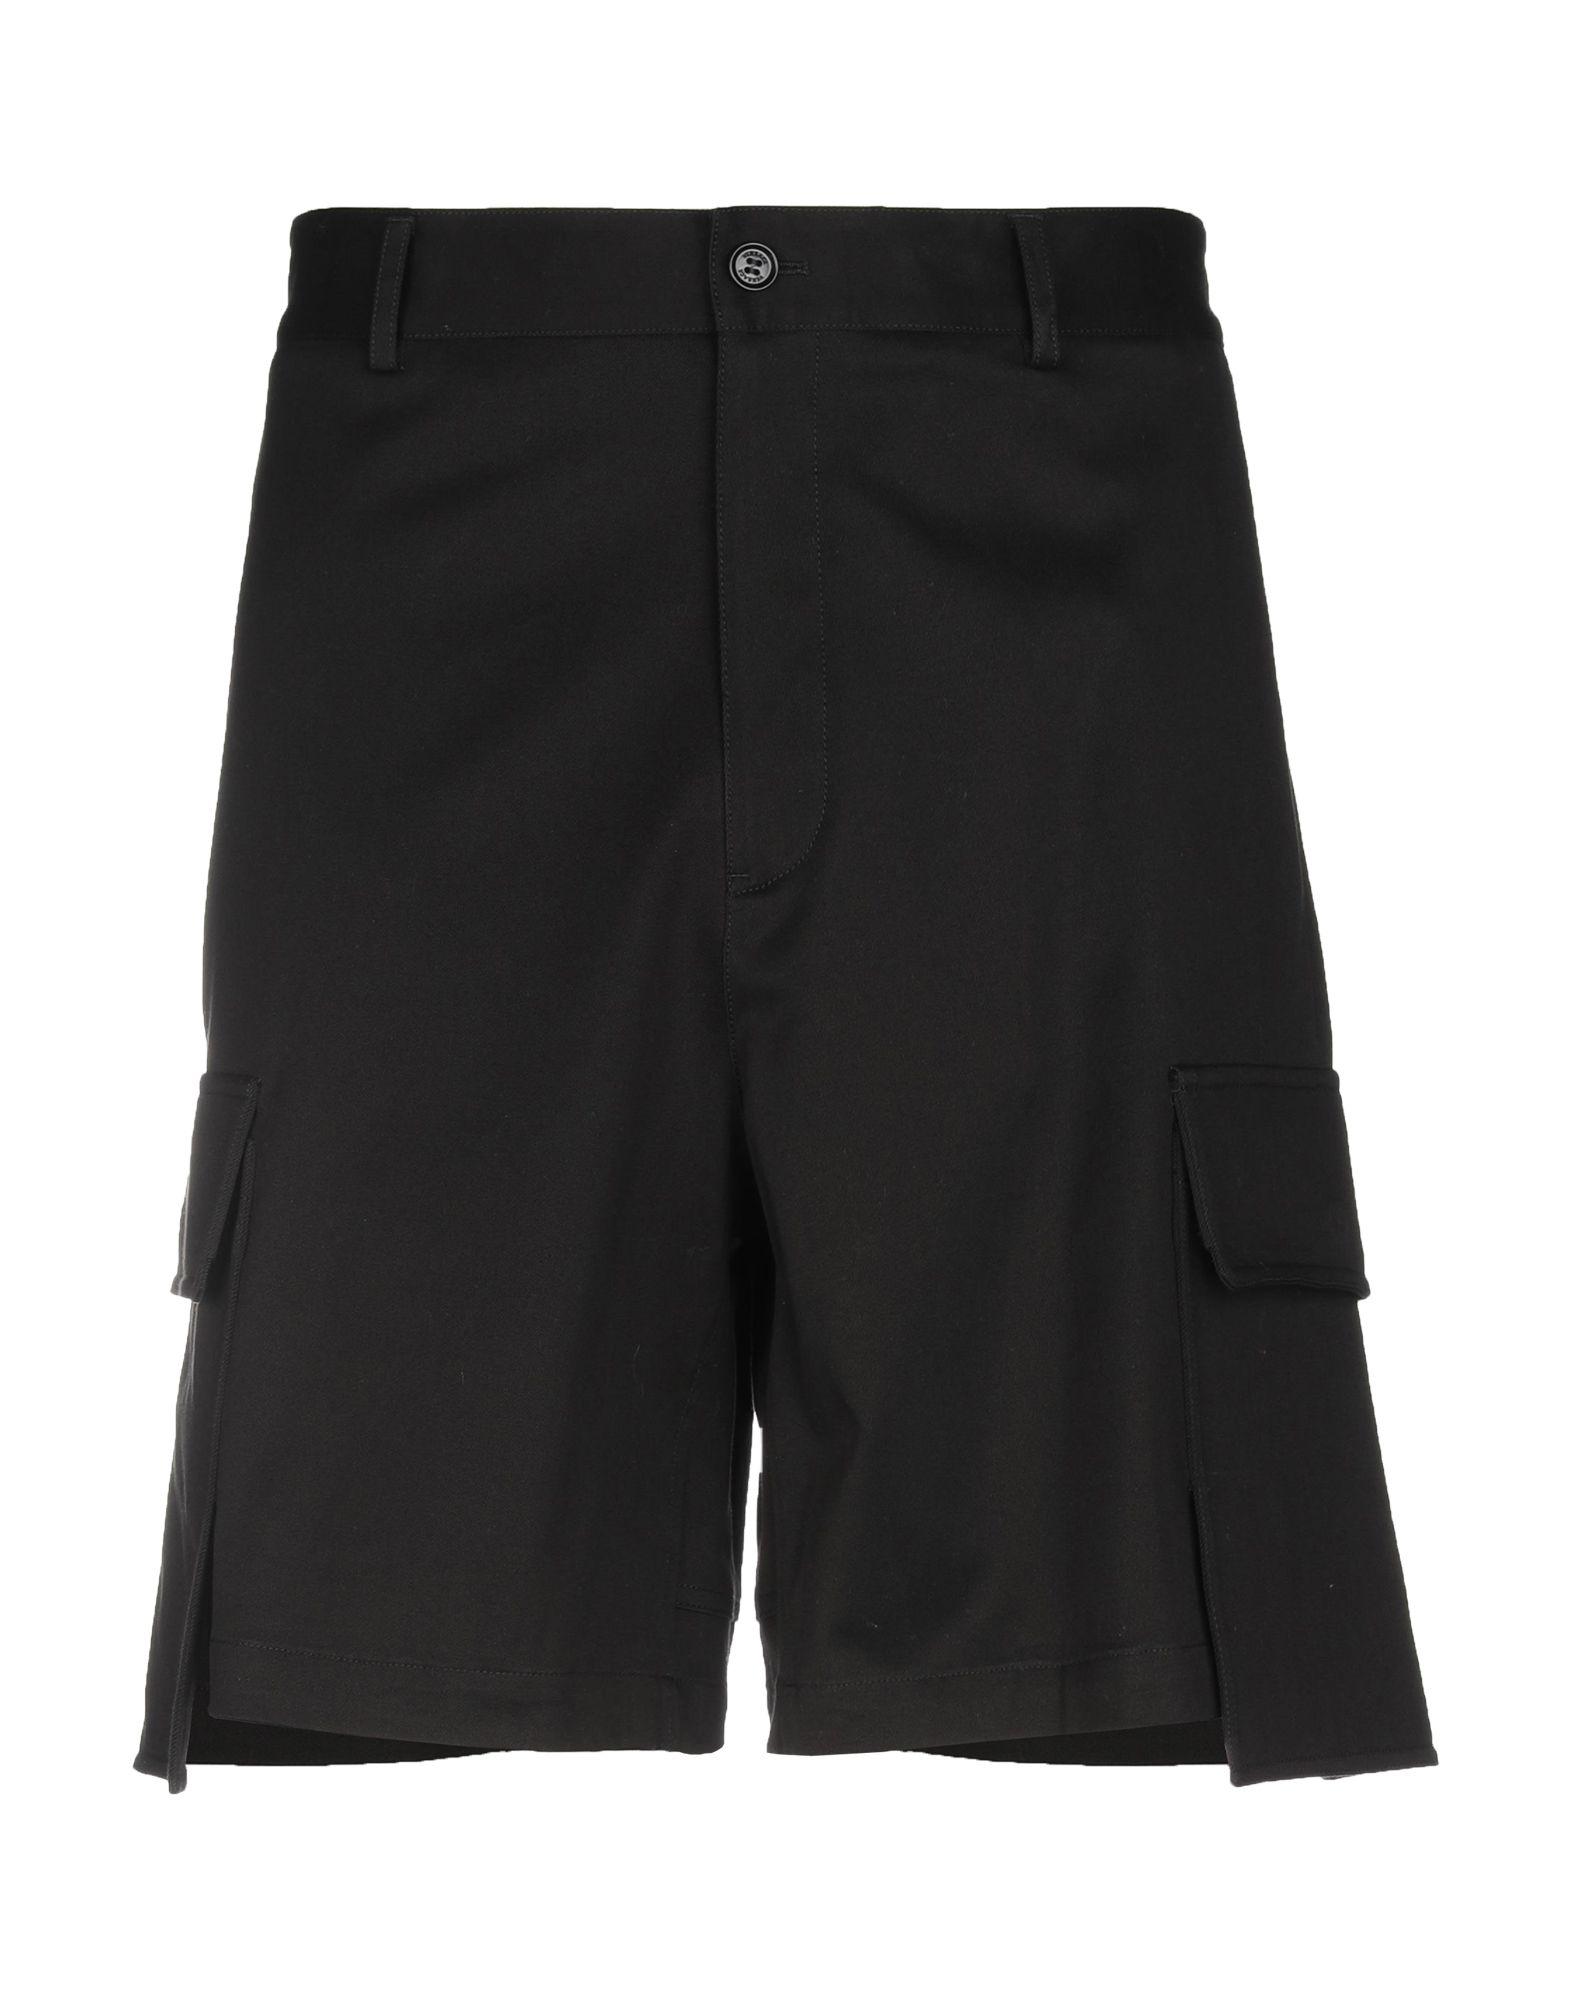 Versace Cotton Bermuda Shorts in Black for Men - Lyst